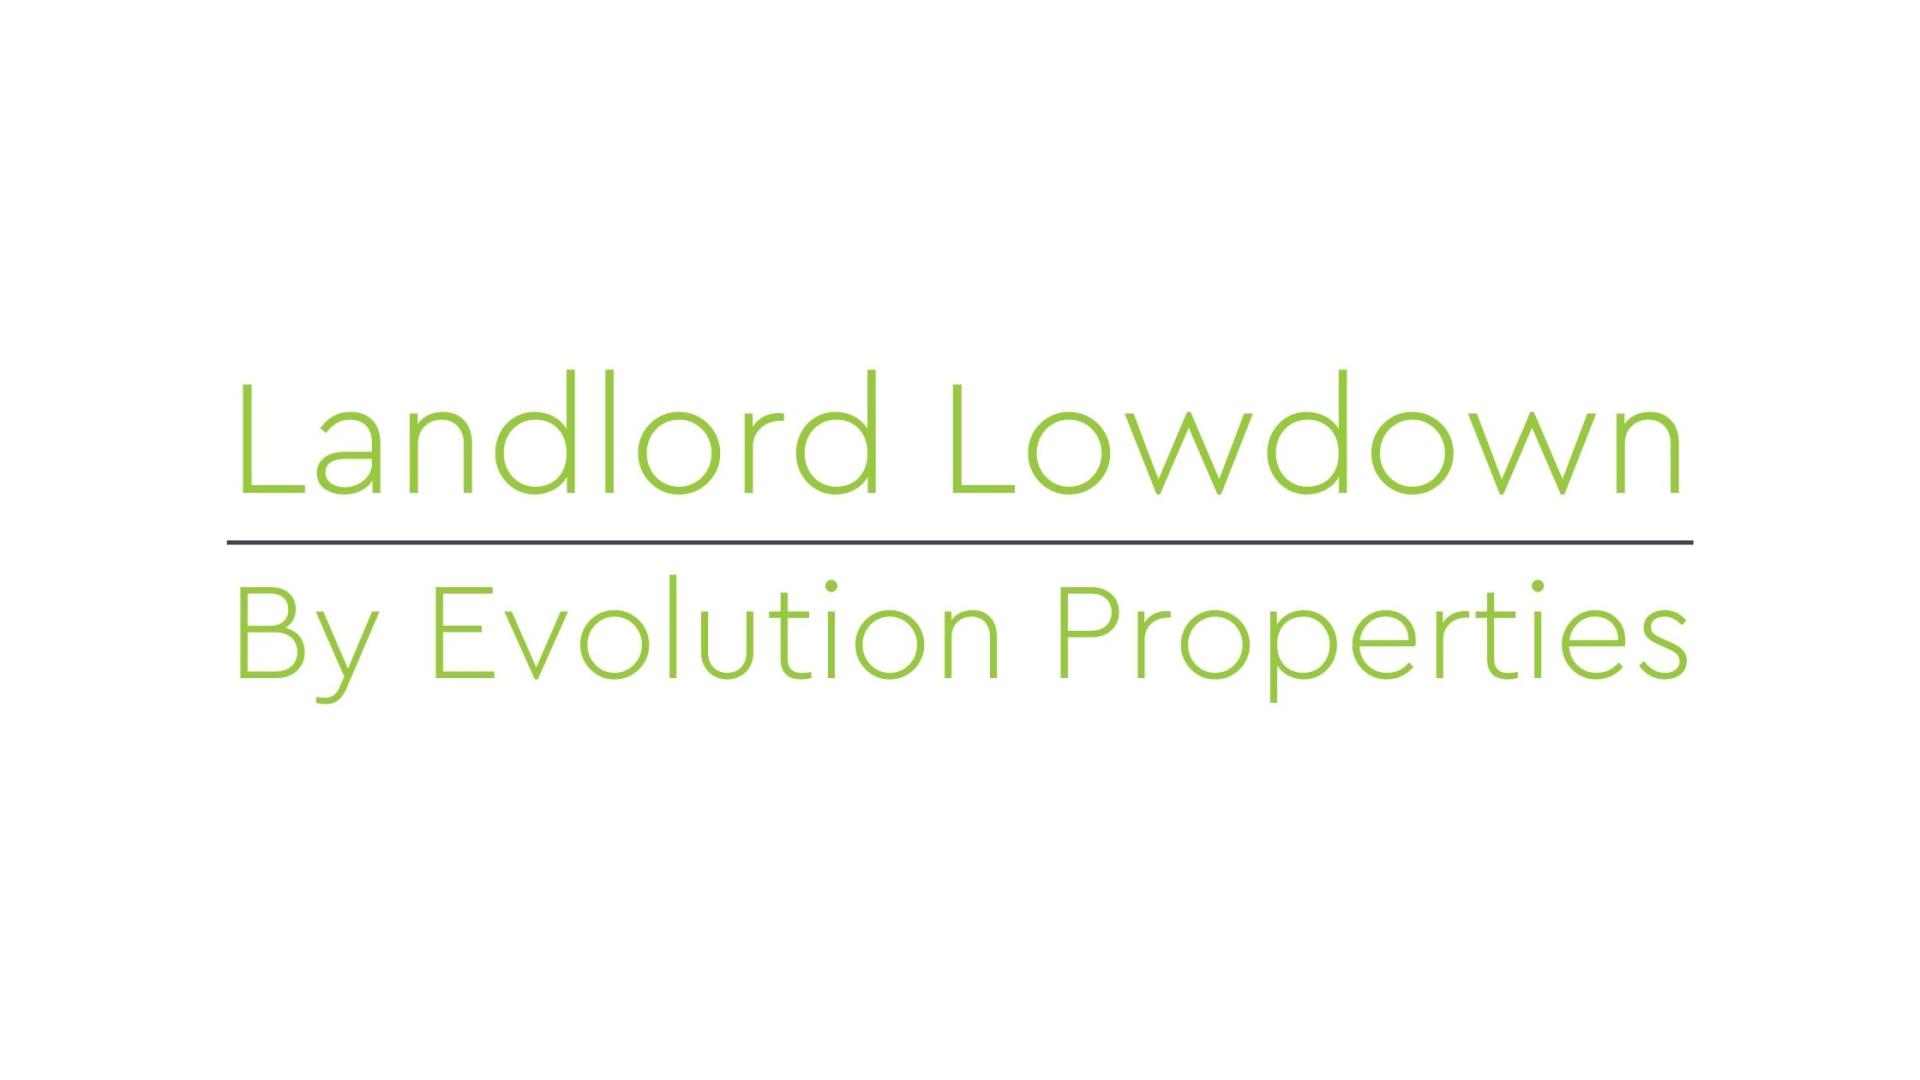 Landlord Lowdown - Tenancy Terms